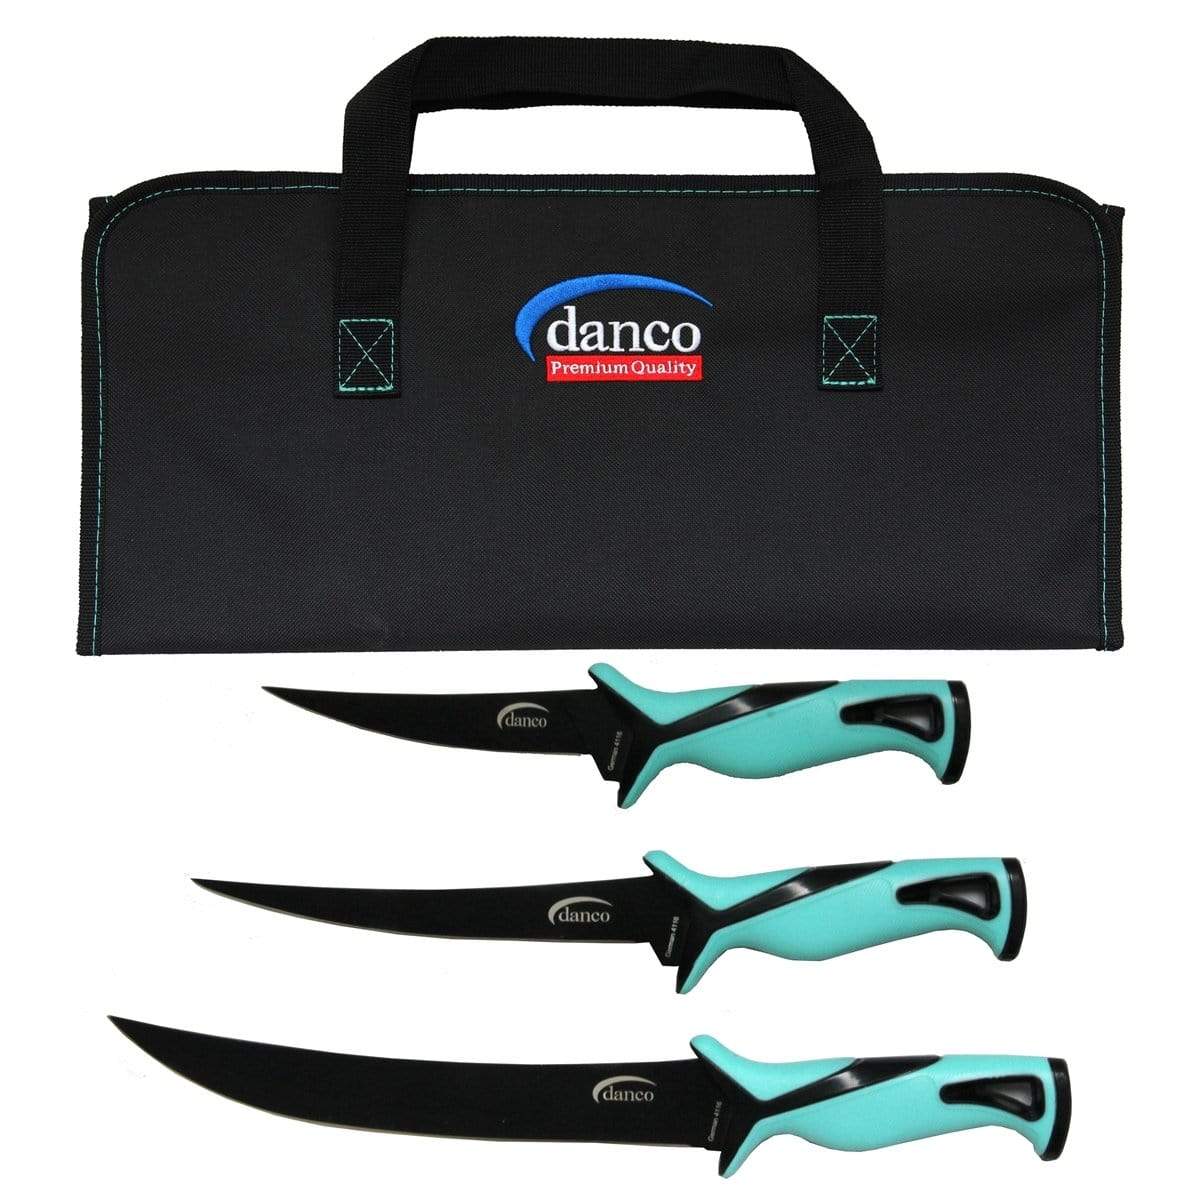 Danco Pro Series Roll Up Bag Kit - The Saltwater Edge